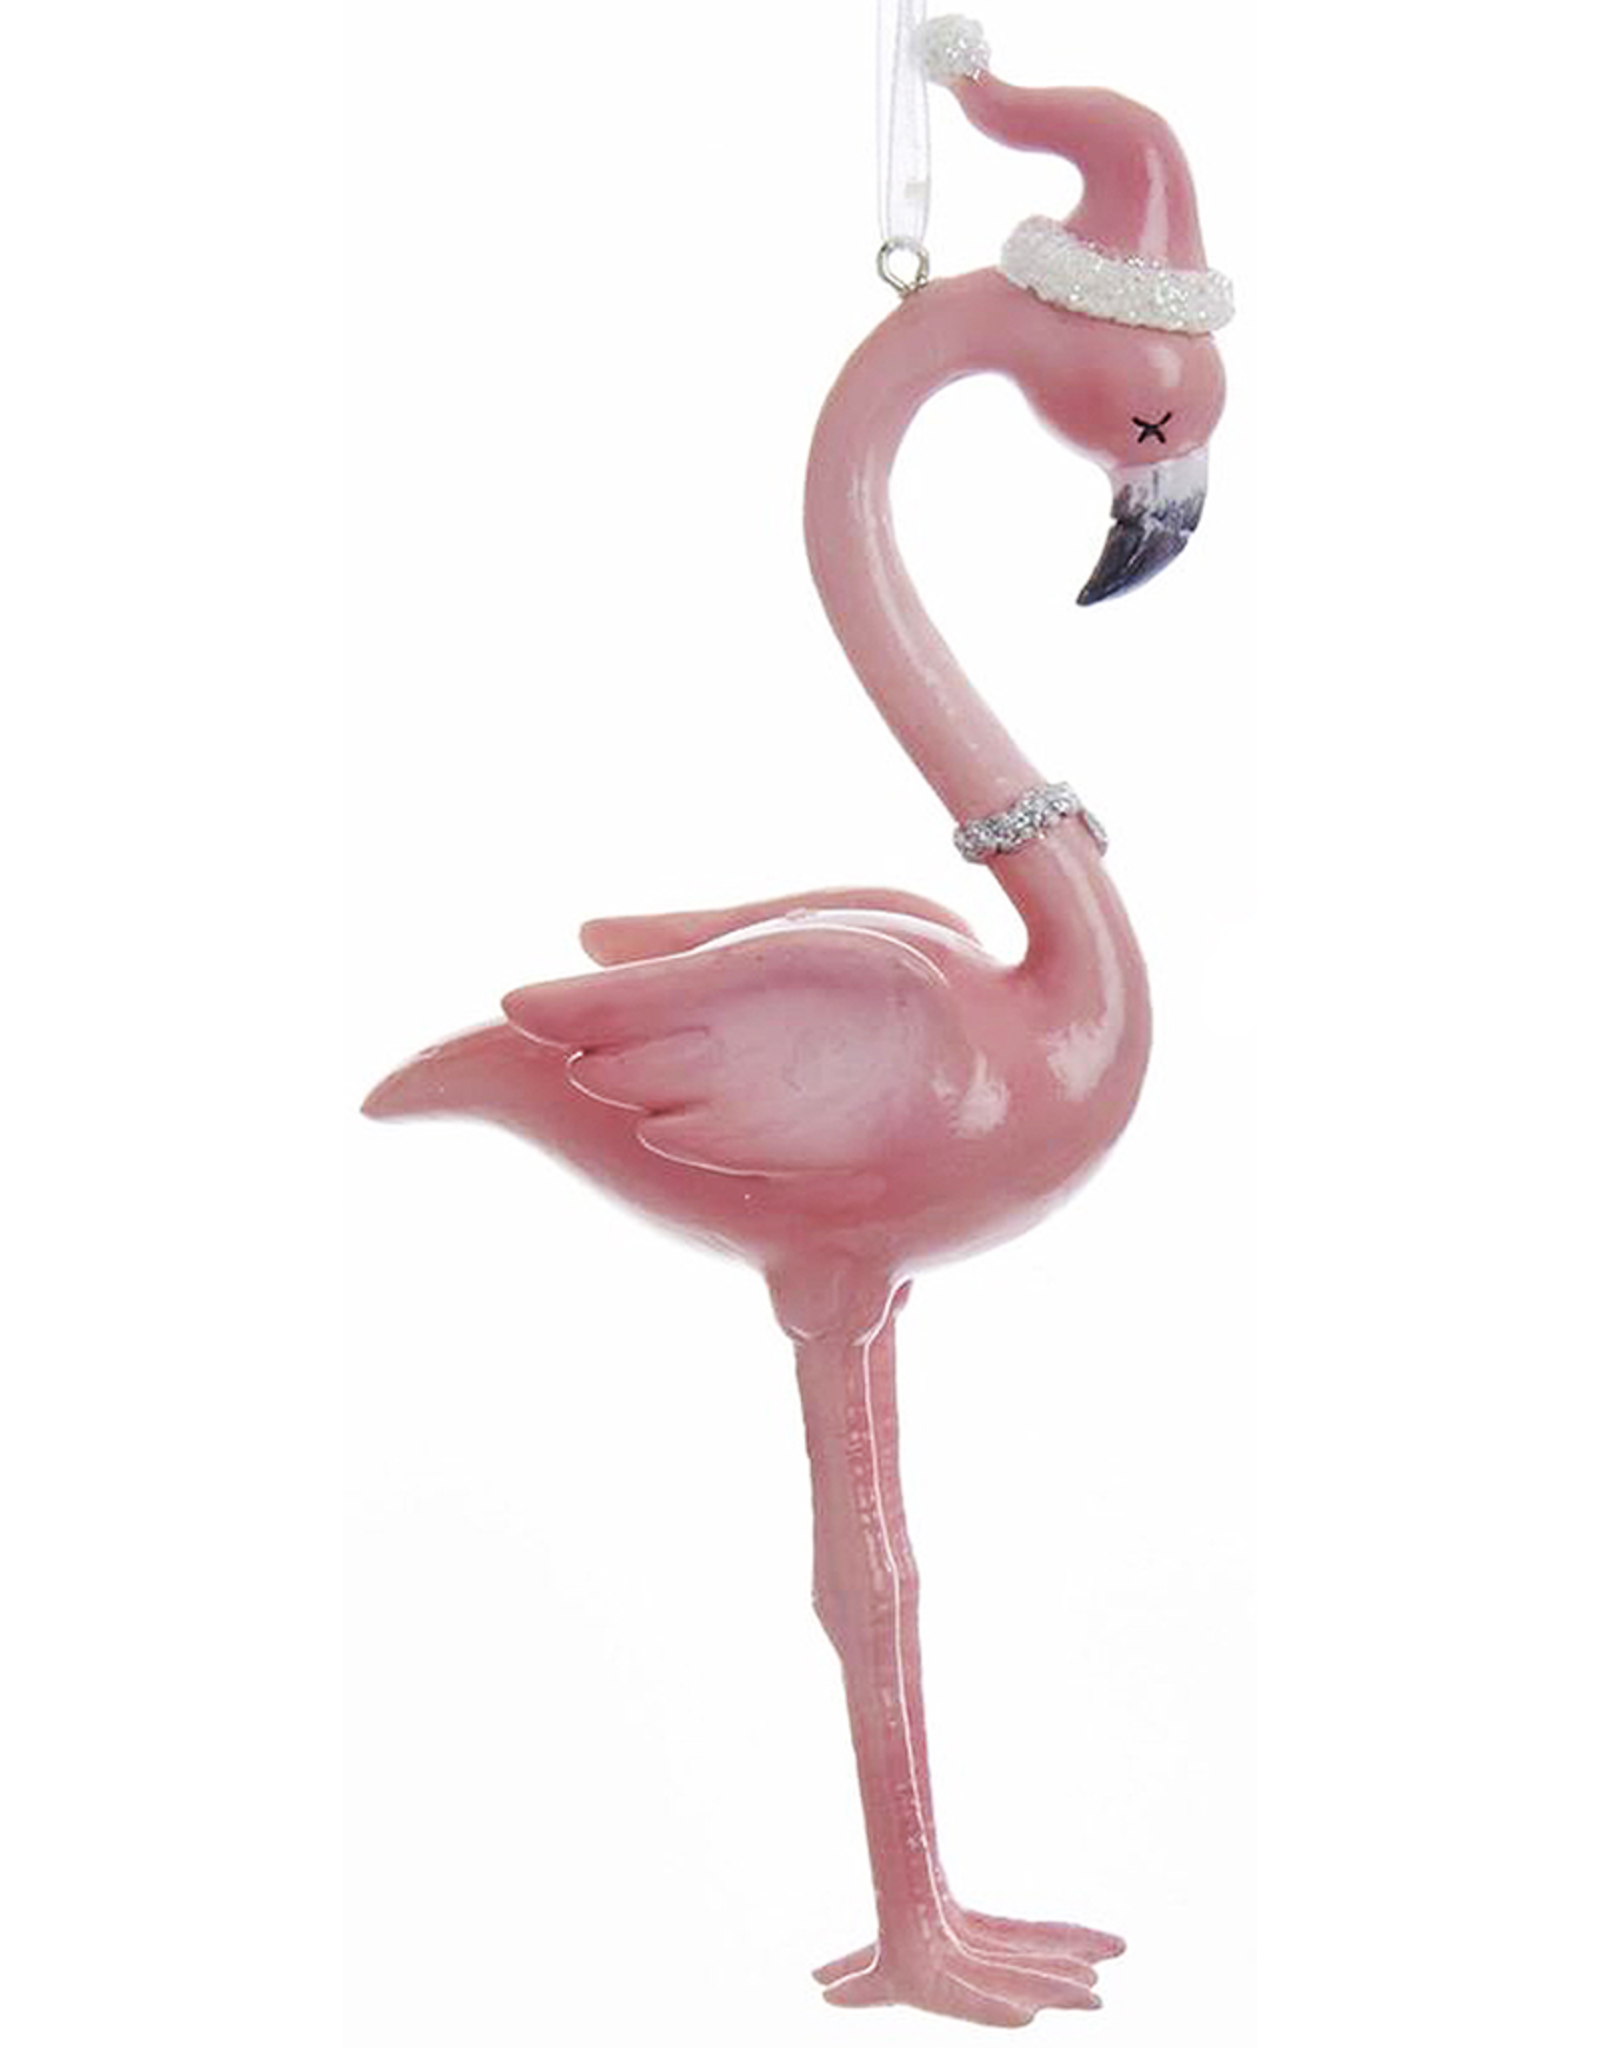 Kurt Adler Millennial Pink Flamingo in Santa Hat Ornament - STR